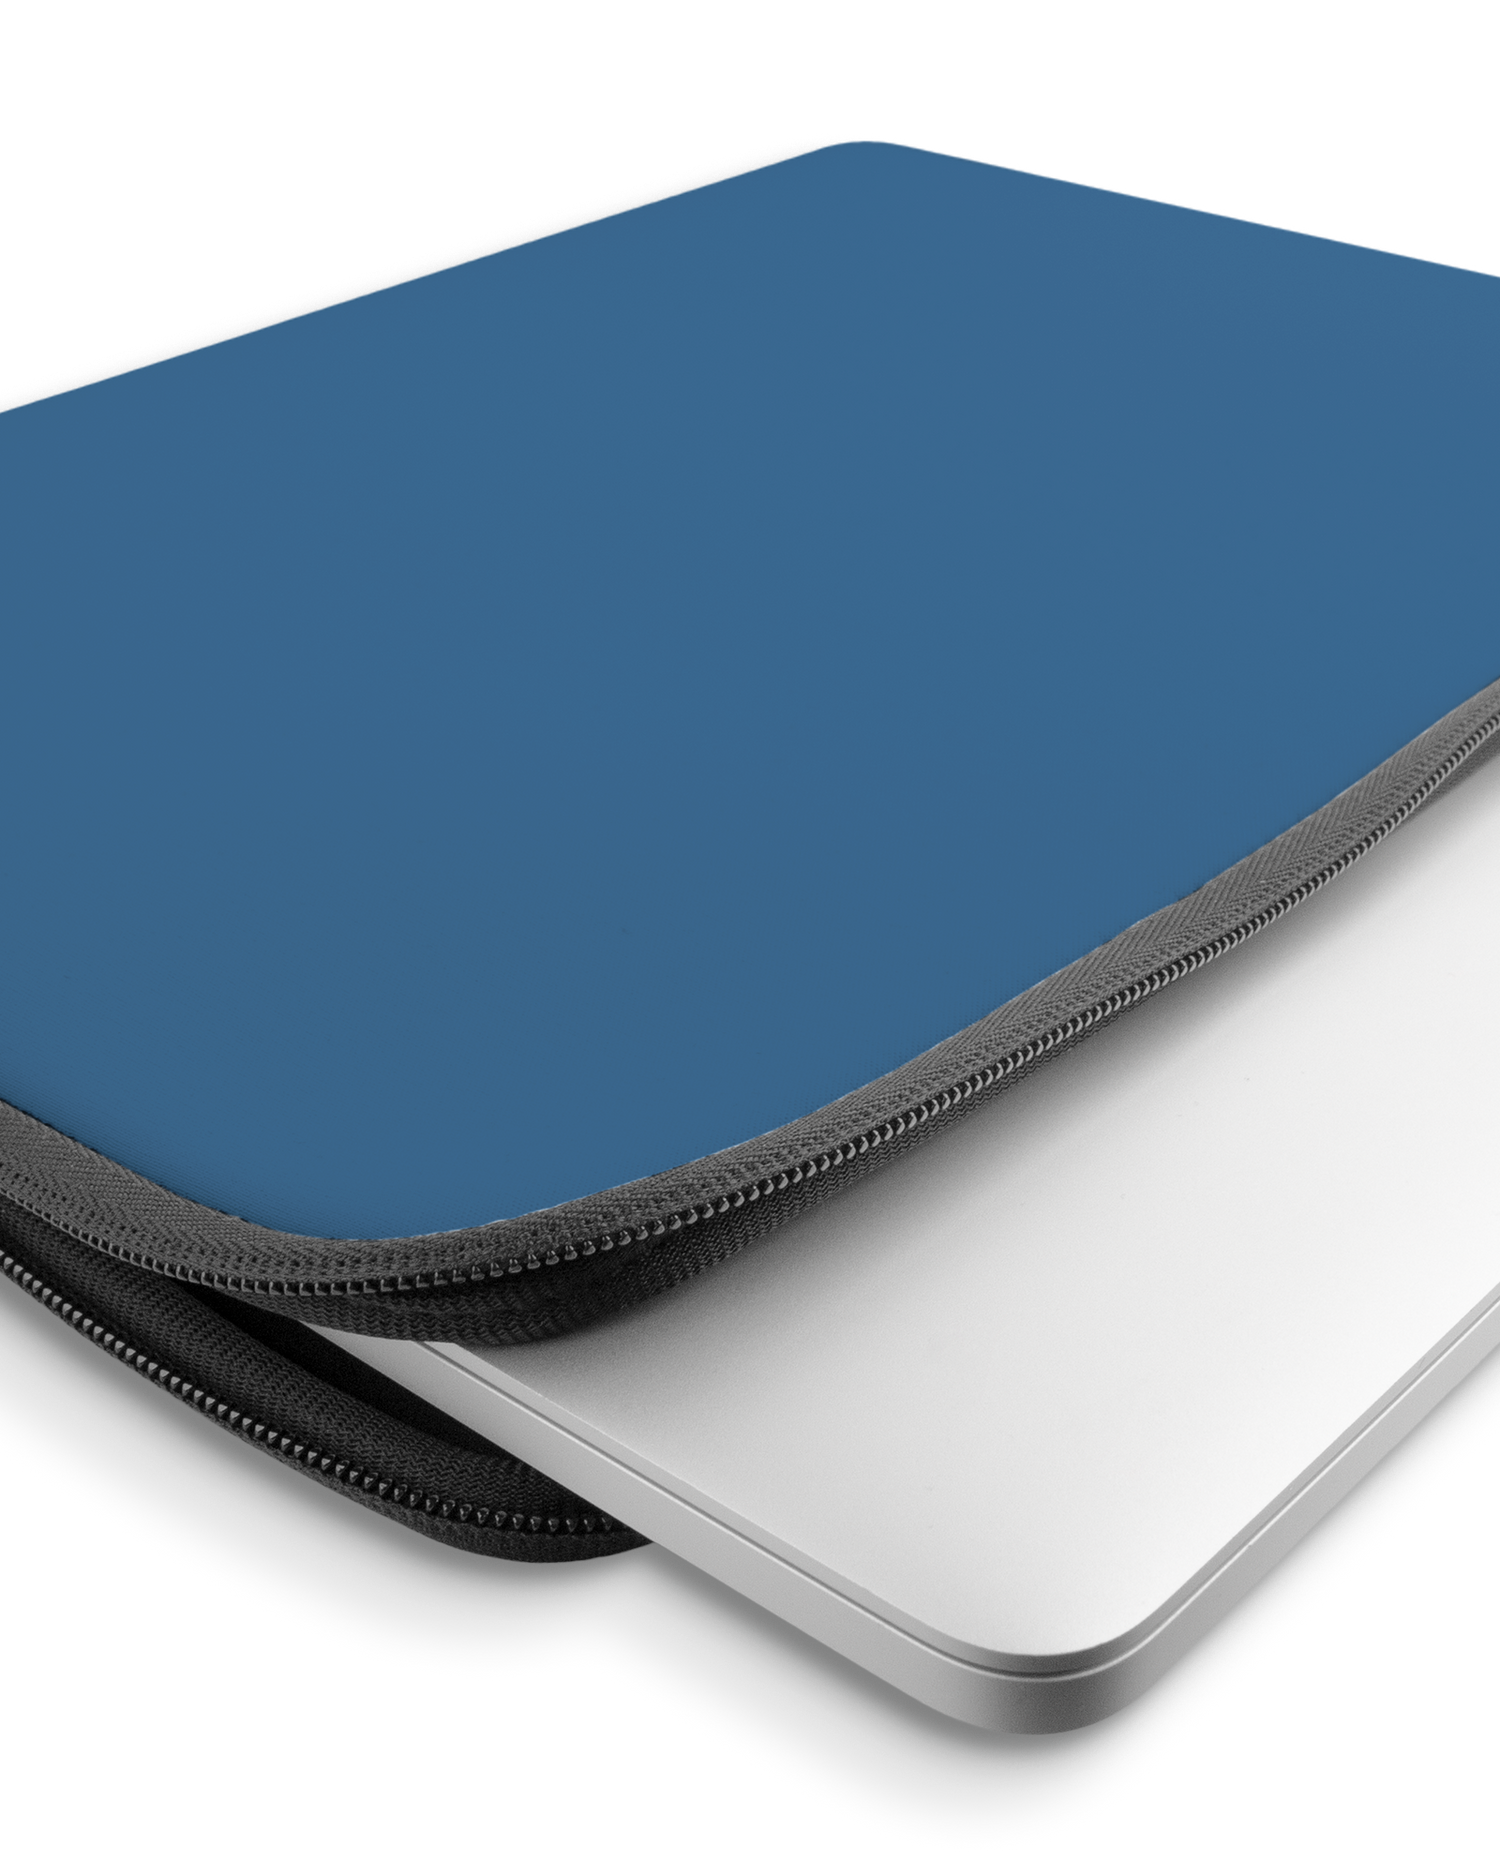 CLASSIC BLUE Laptophülle 15-16 Zoll mit Gerät im Inneren